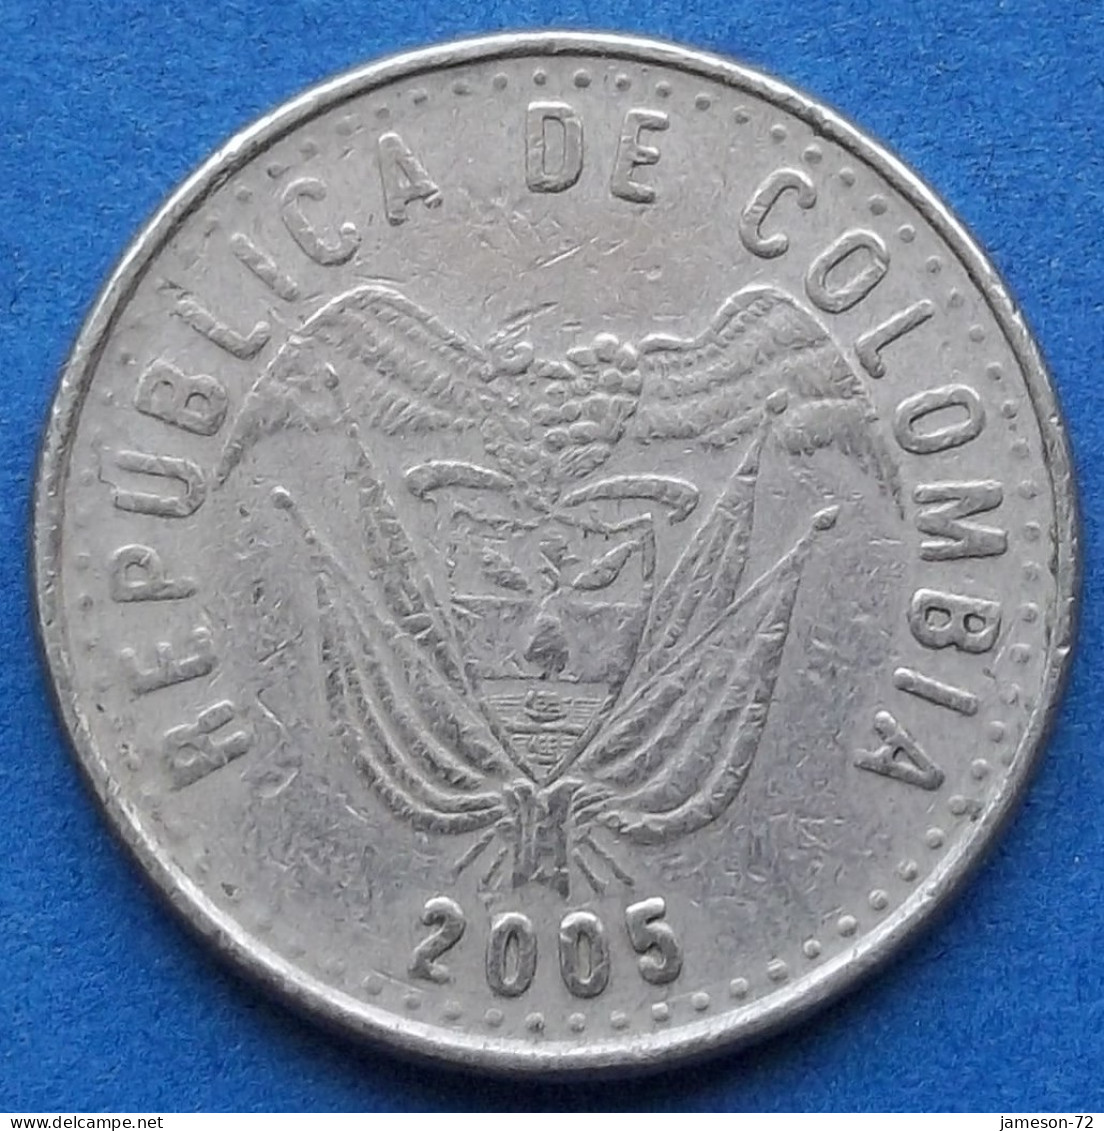 COLOMBIA - 50 Pesos 2005 KM# 283.2 Republic - Edelweiss Coins - Kolumbien